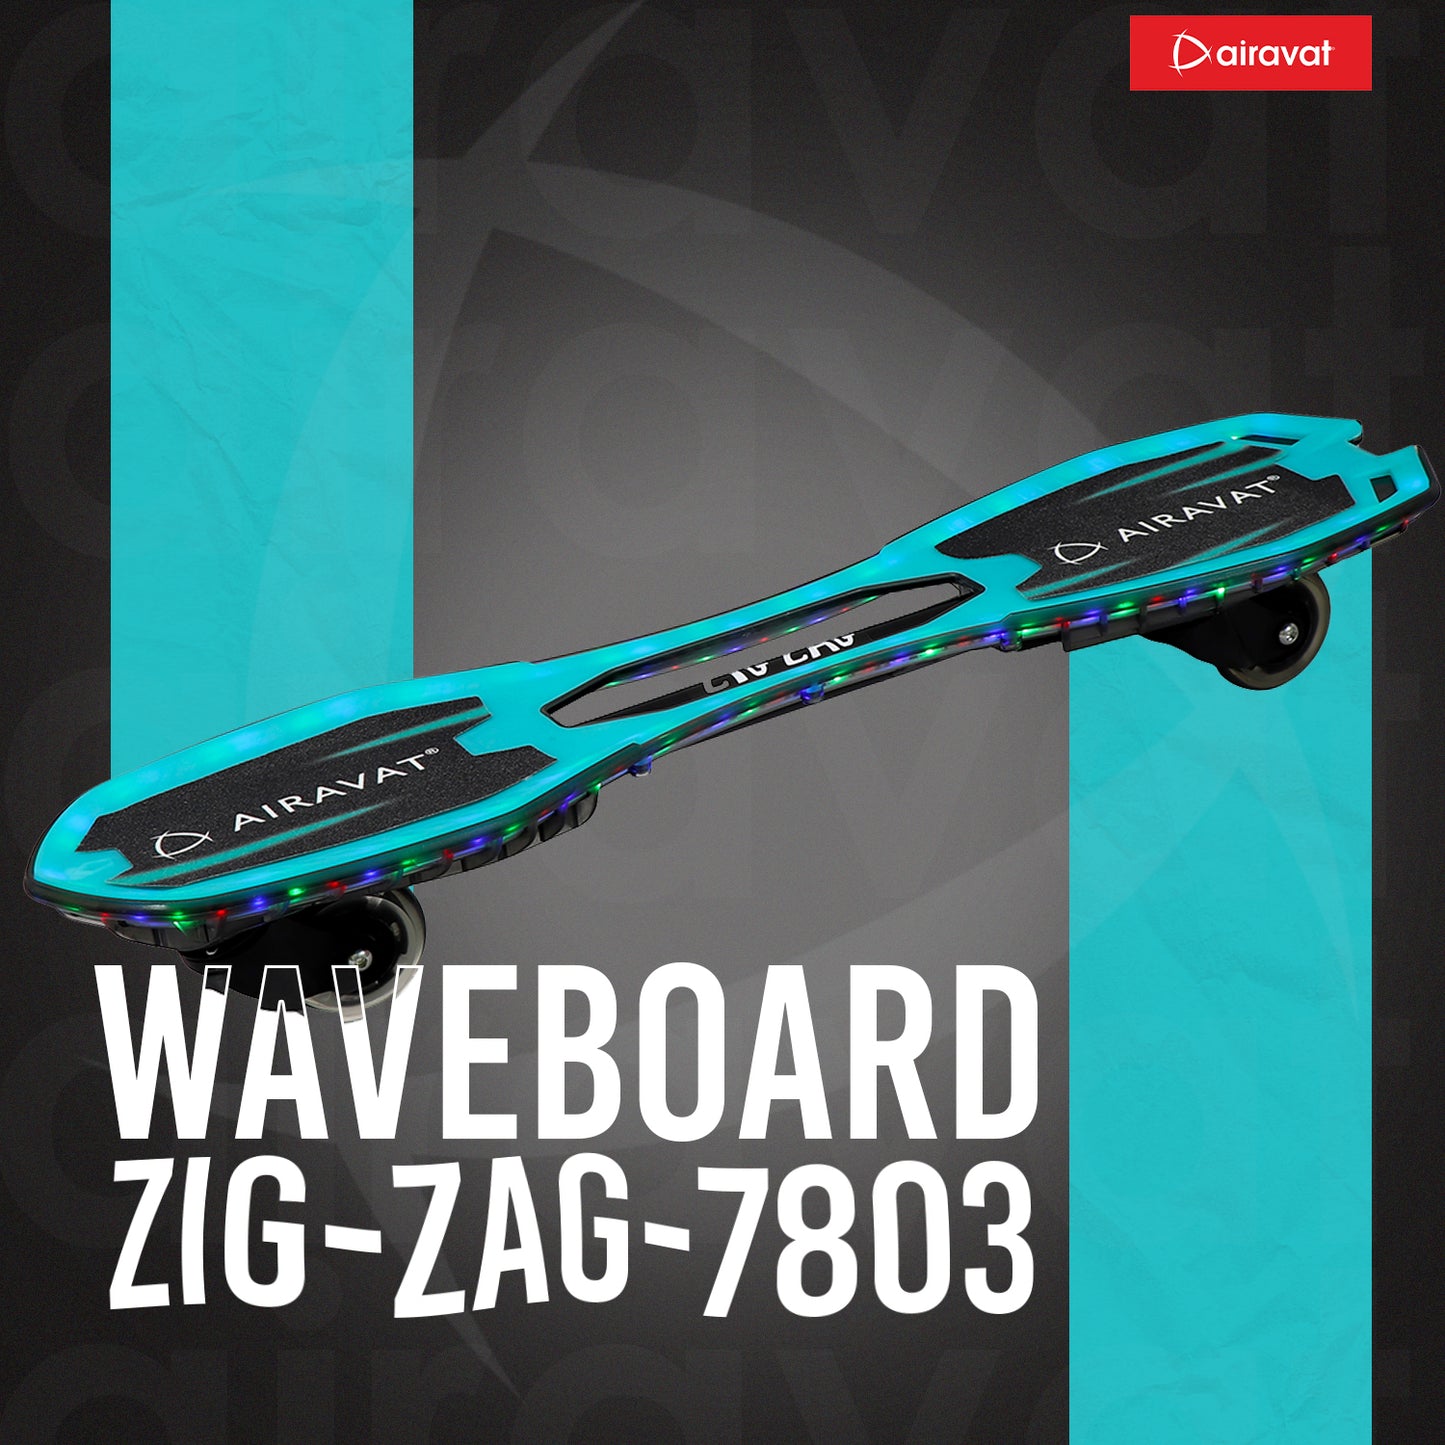 Graphics of zig zag waveboard blue